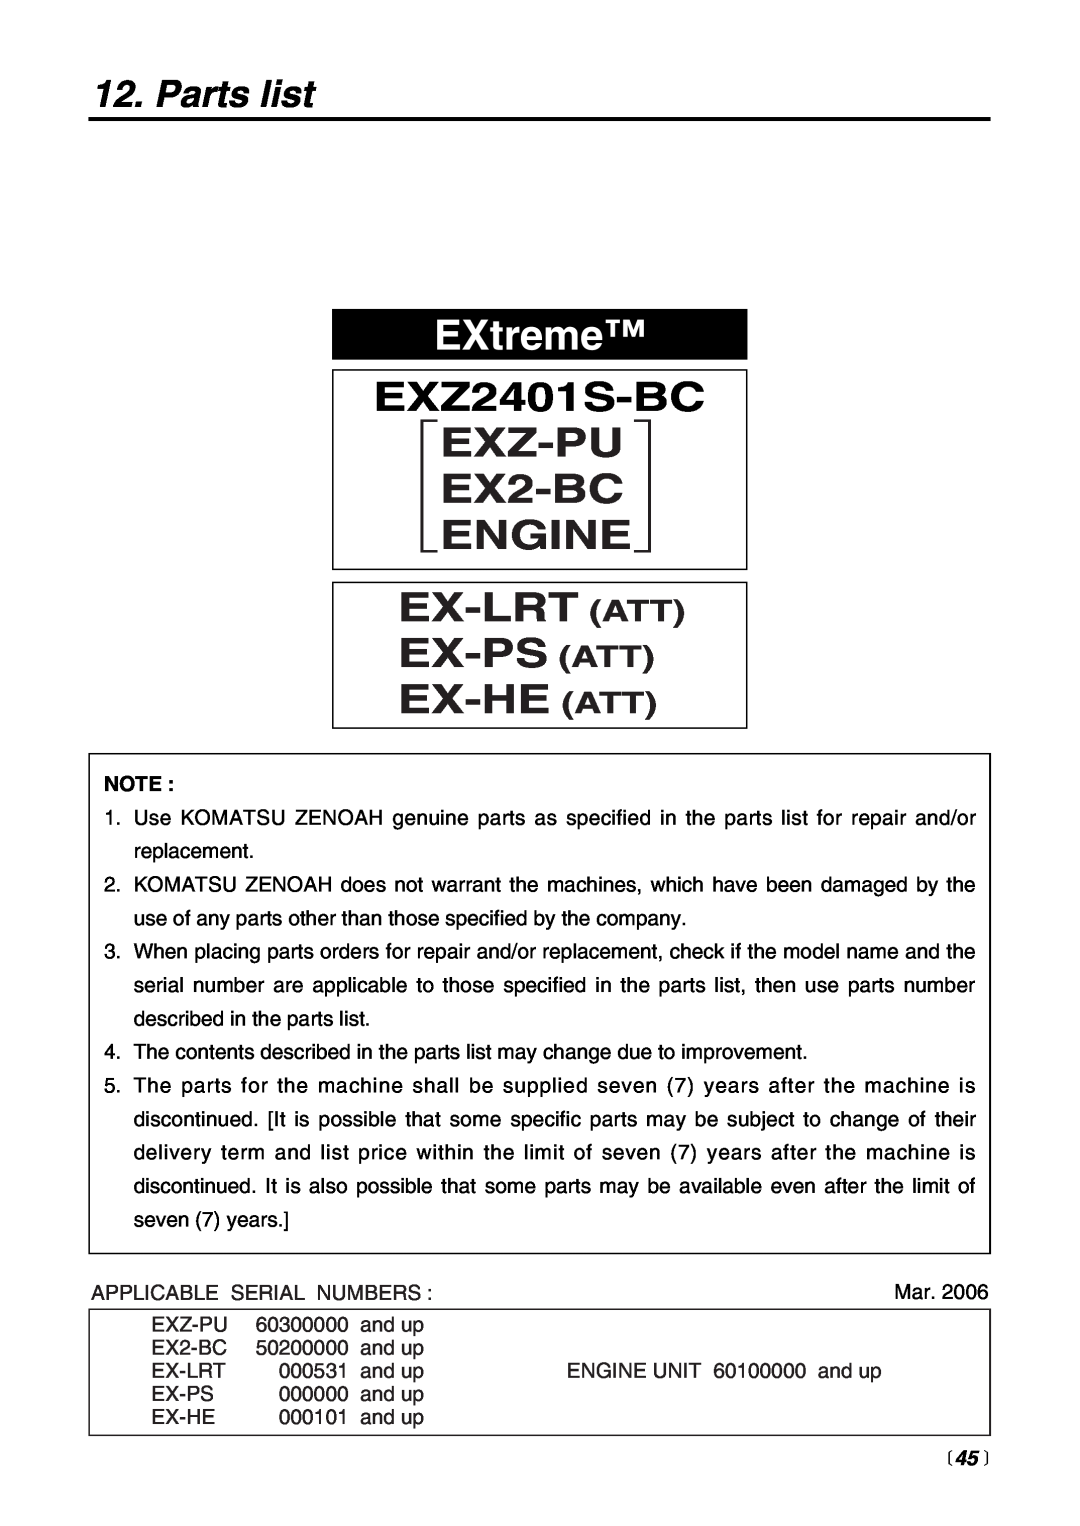 RedMax manual Parts list, EXtreme, EXZ2401S-BC EXZ-PU ,  EX2-BC   ENGINE, Ex-Lrt Att Ex-Ps Att Ex-He Att 